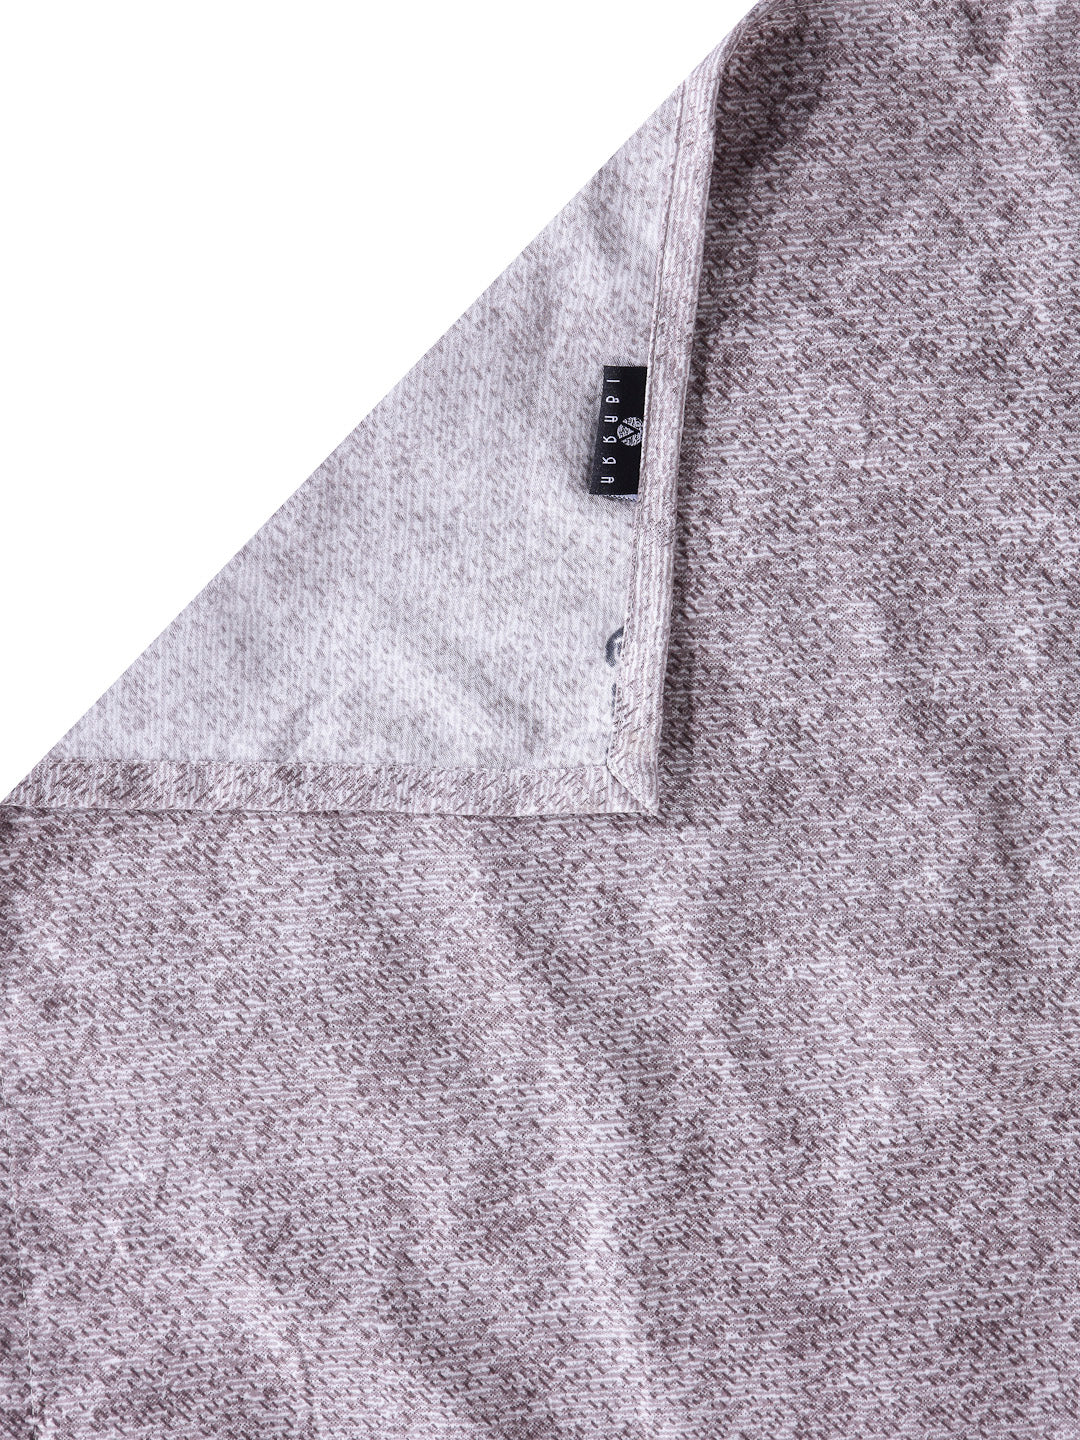 Arrabi Multi Stripes TC Cotton Blend King Size Bookfold Bedsheet with 2 Pillow Covers (250 X 220 cm)